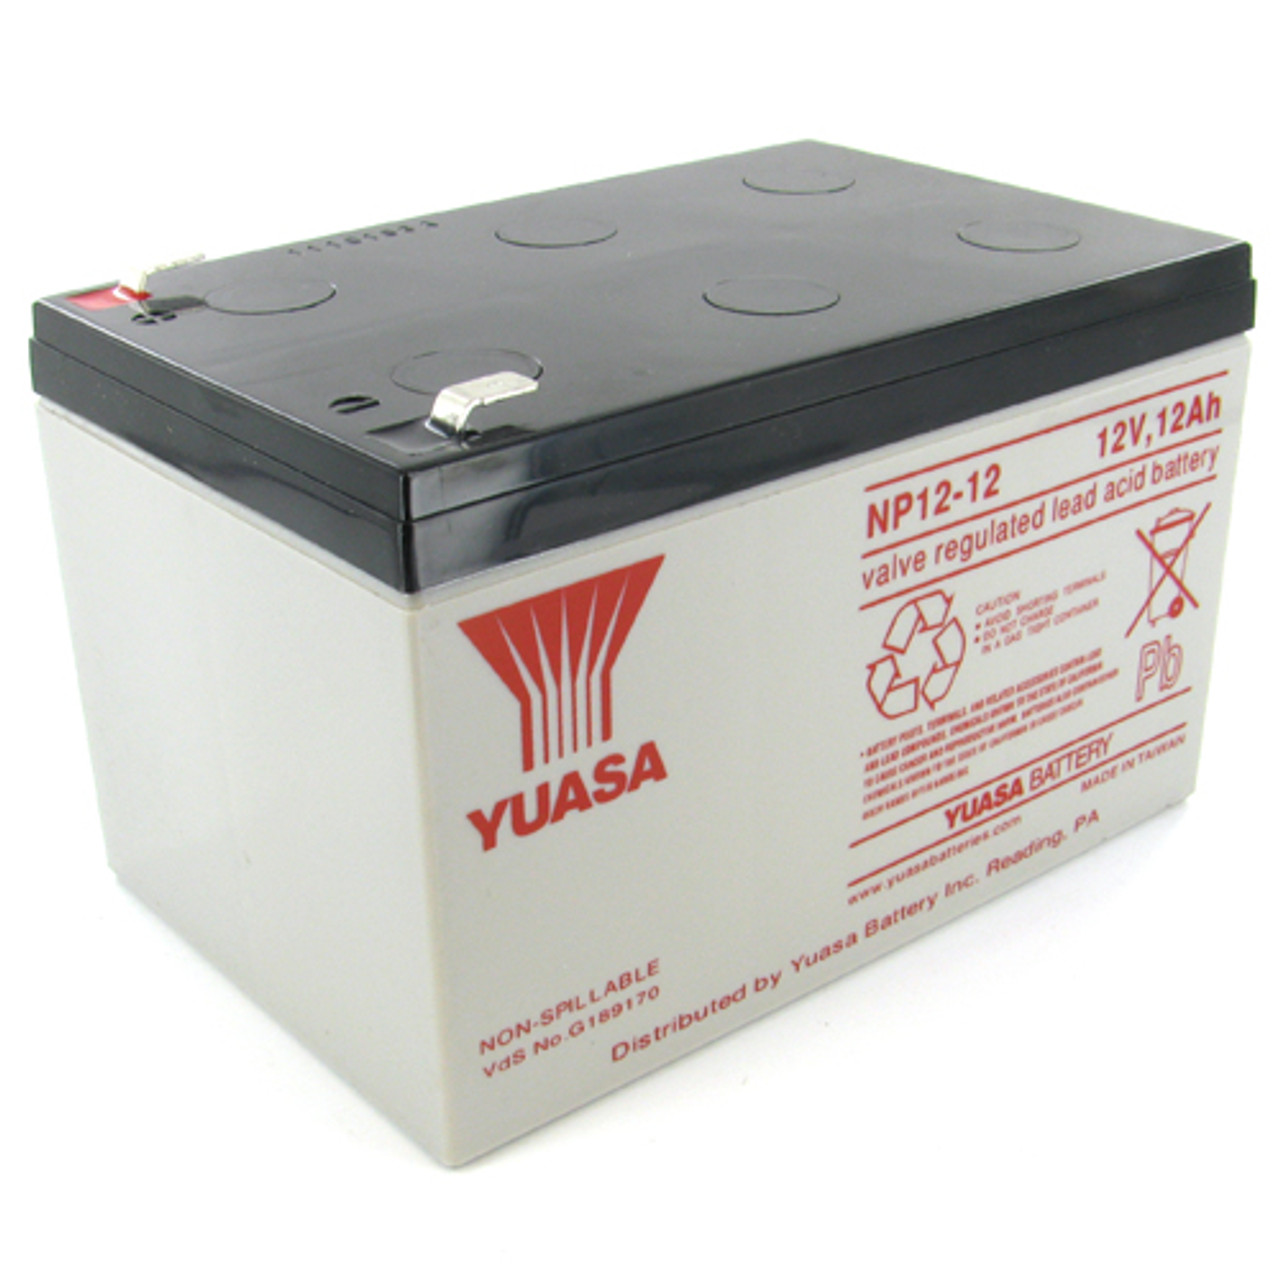 Yuasa аккумуляторы ngp18-12 12v18ah. Аккумулятор Yuasa 6 np12-6. Yuasa аккумуляторы 12v. Батарея для ups Yuasa np18-12. Батарея 12v 12ah